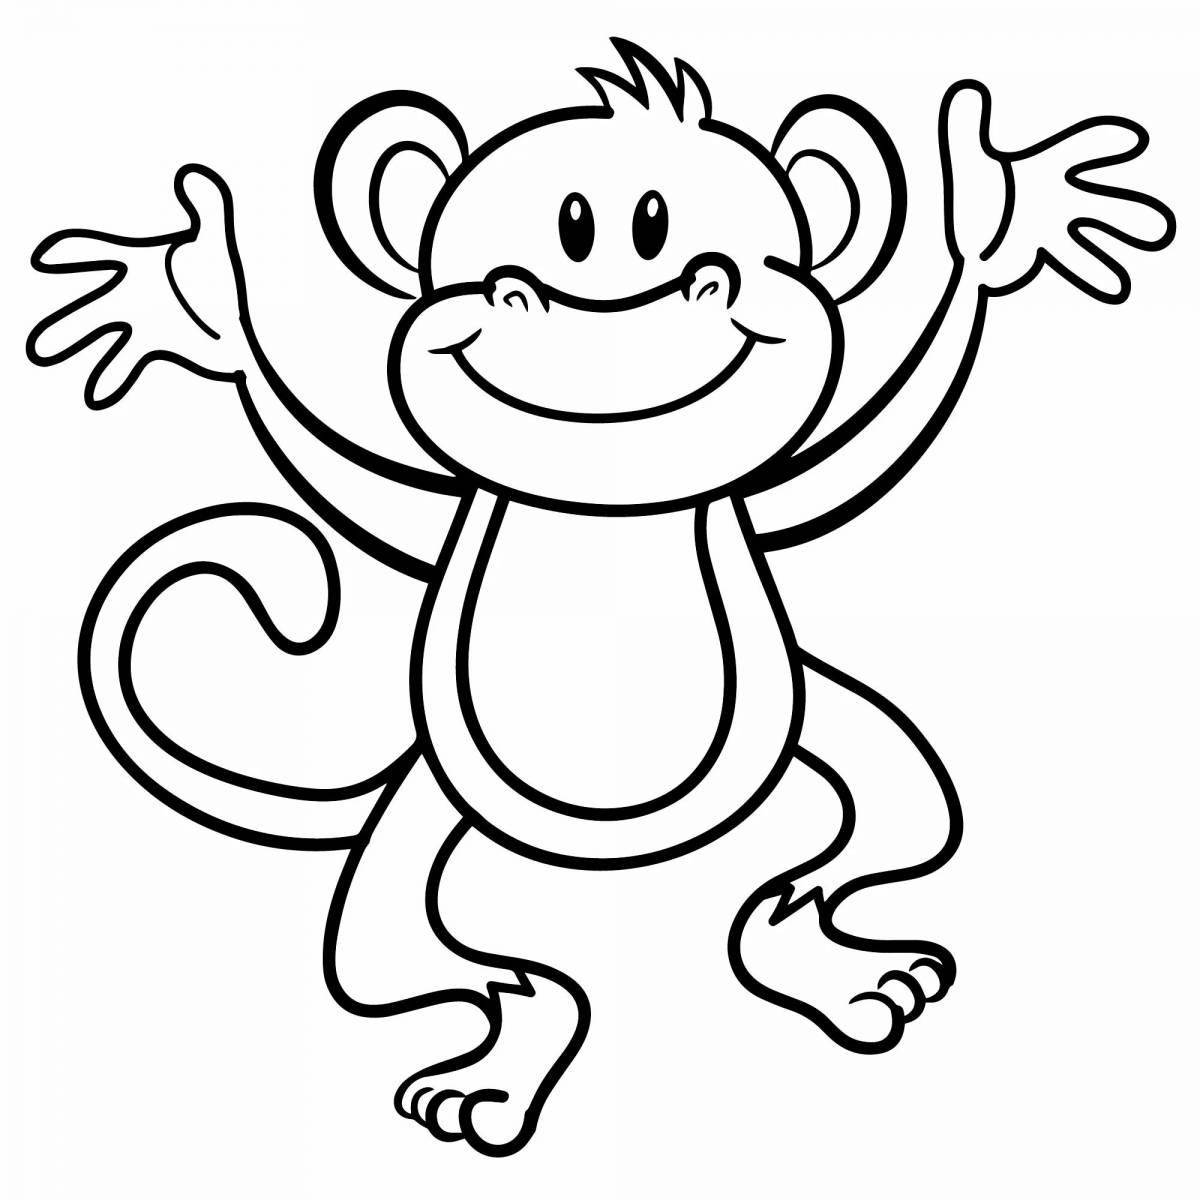 Sweet monkey drawing for kids